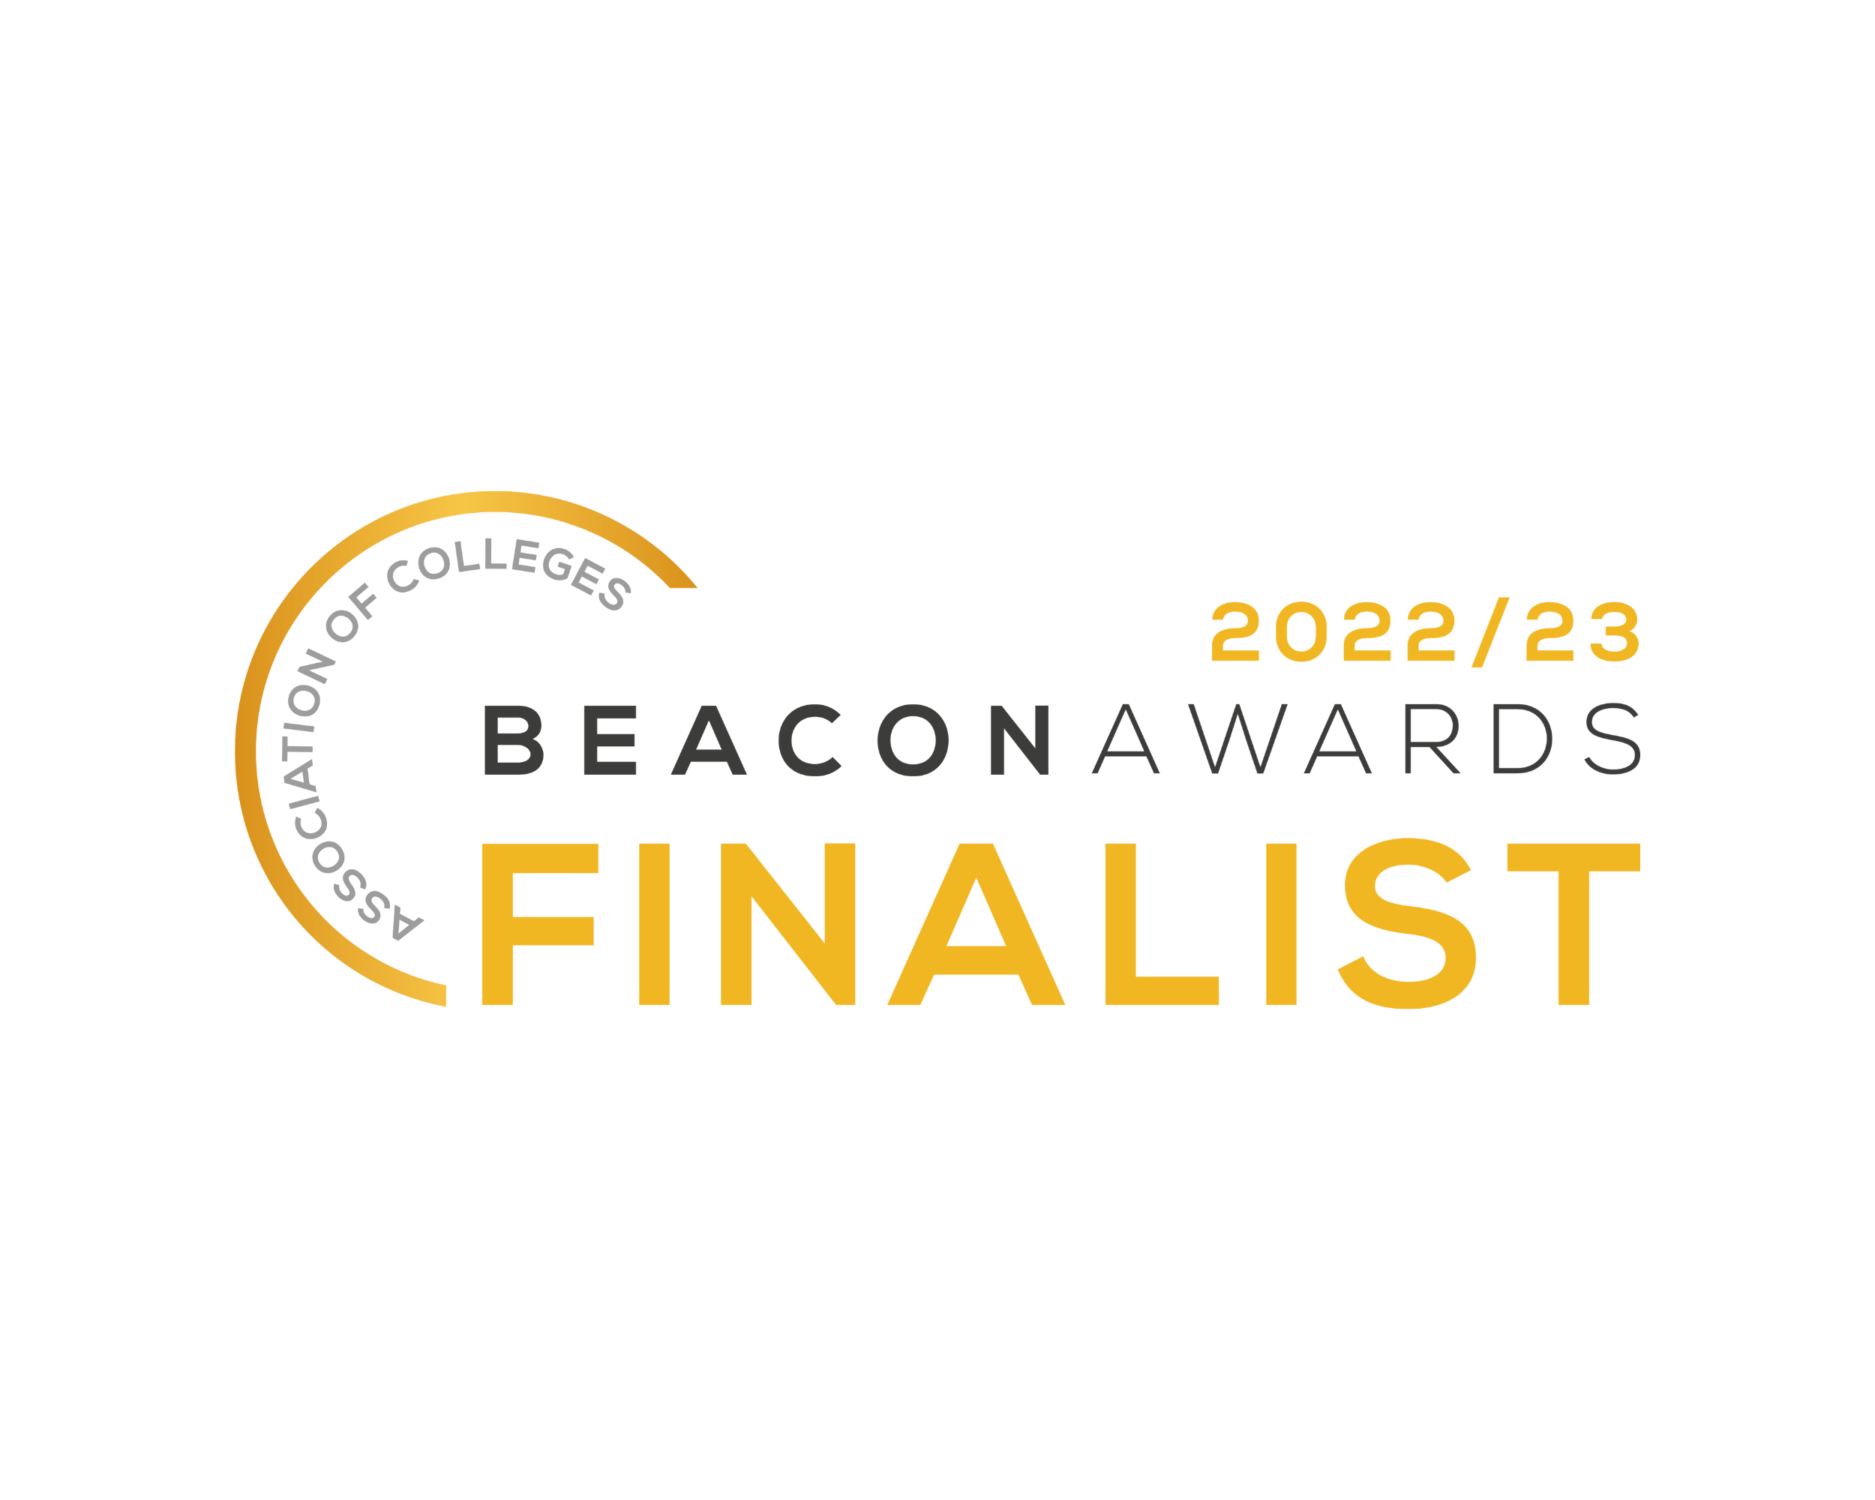 Beacon Awards finalist certificate